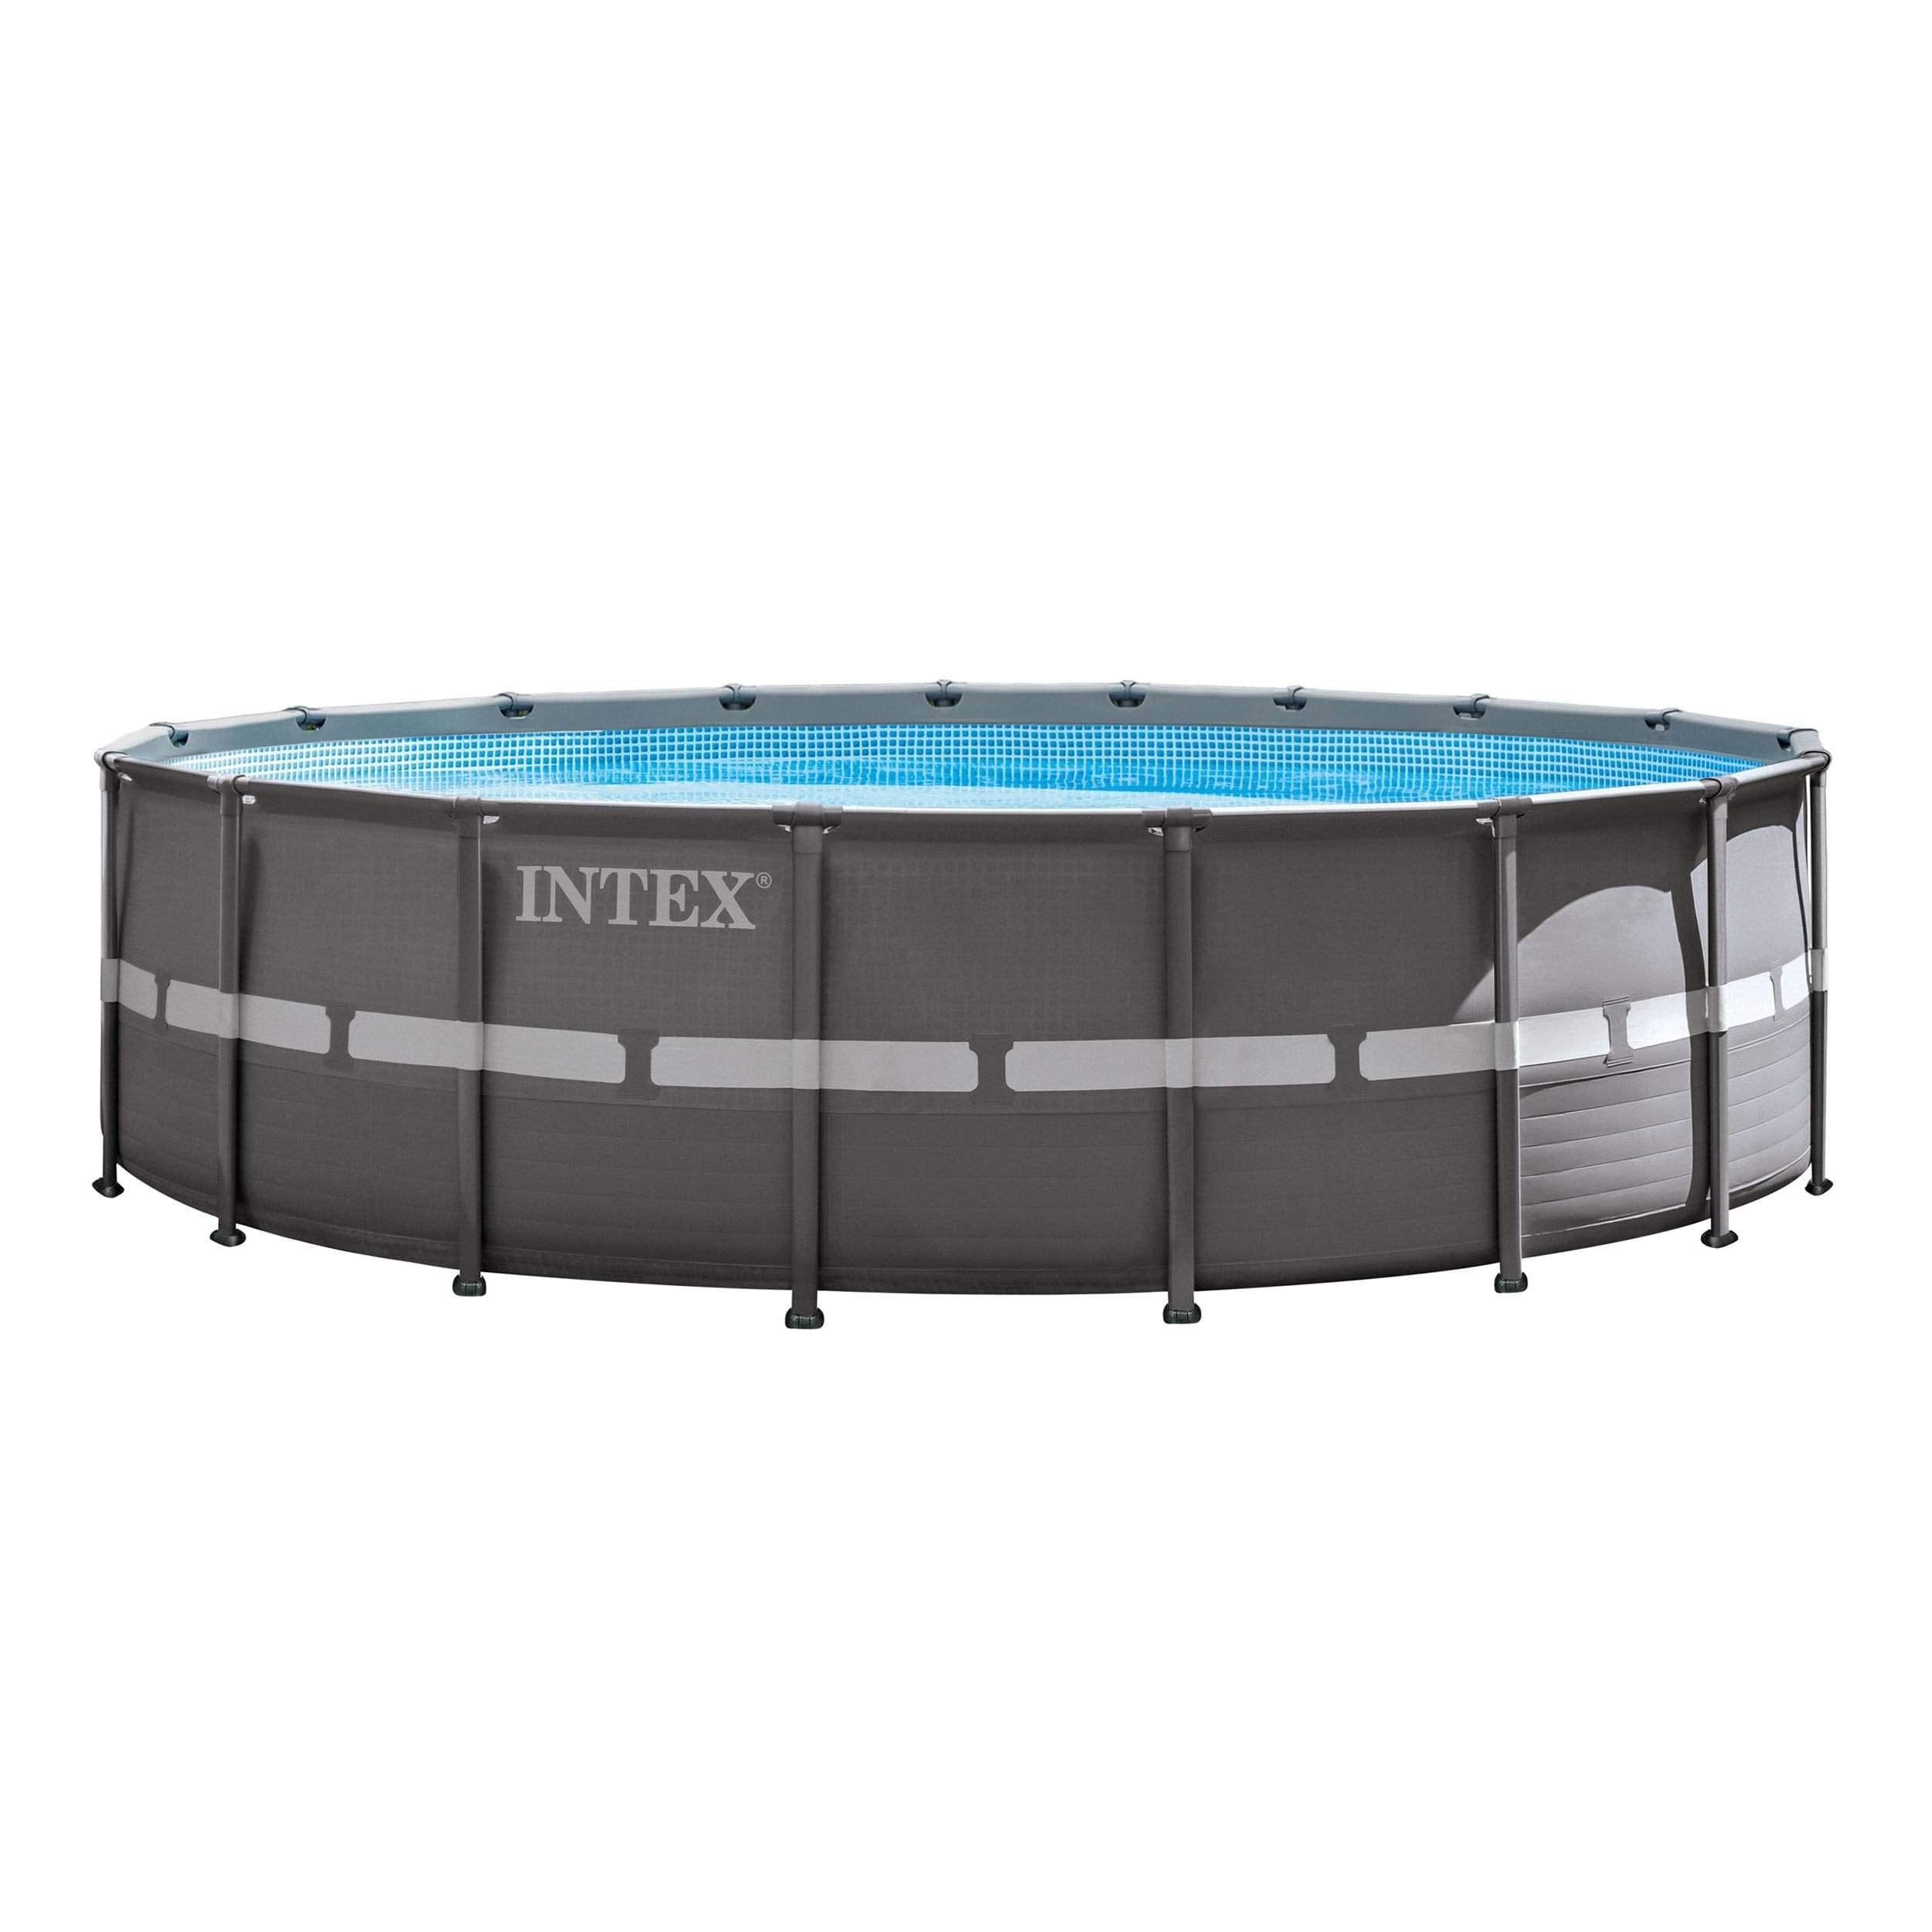 Intex 18ft X 52in Ultra Frame Pool Set